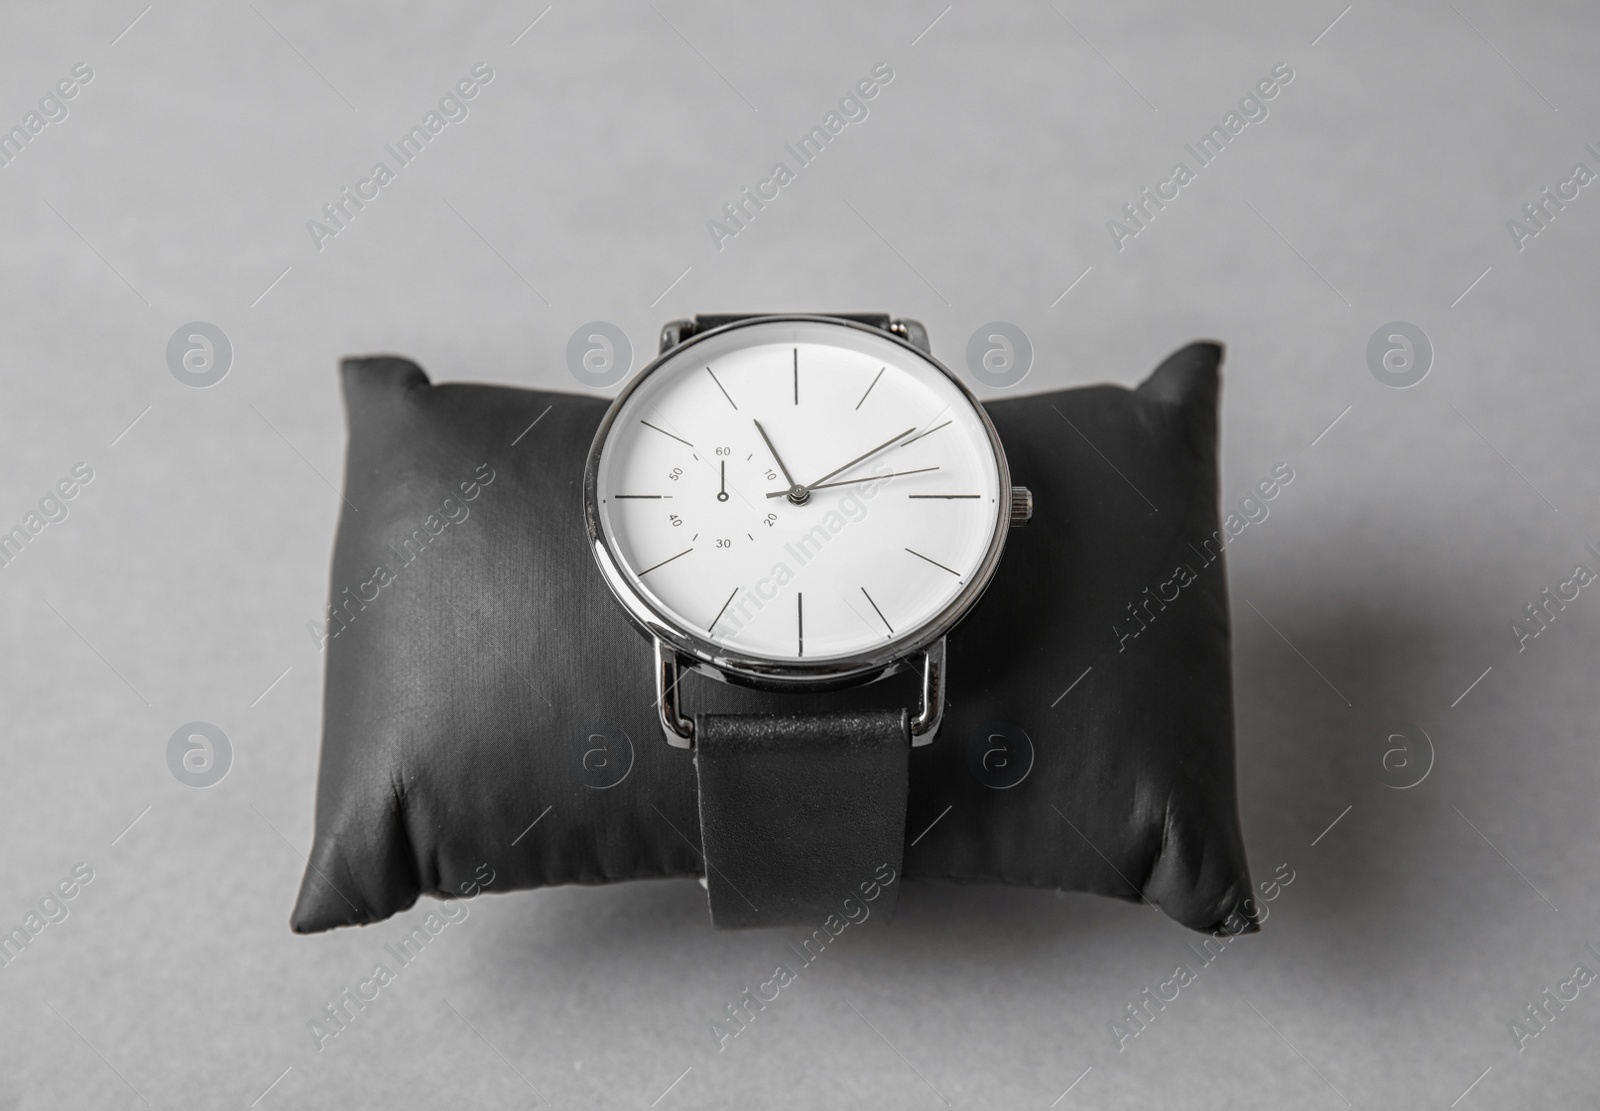 Photo of Small decorative pillow with stylish wrist watch on gray background. Fashion accessory